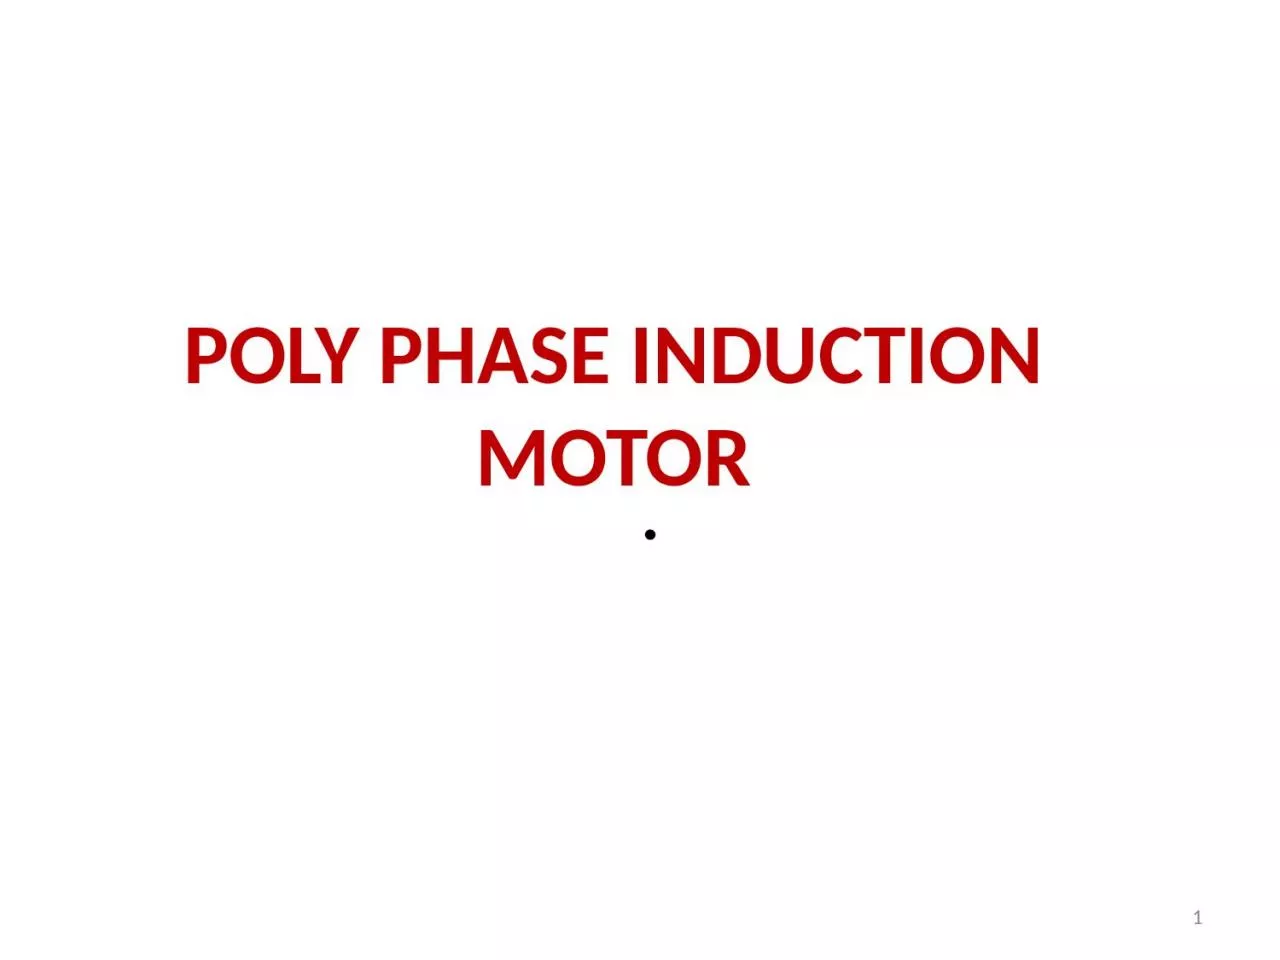 POLY PHASE INDUCTION MOTOR